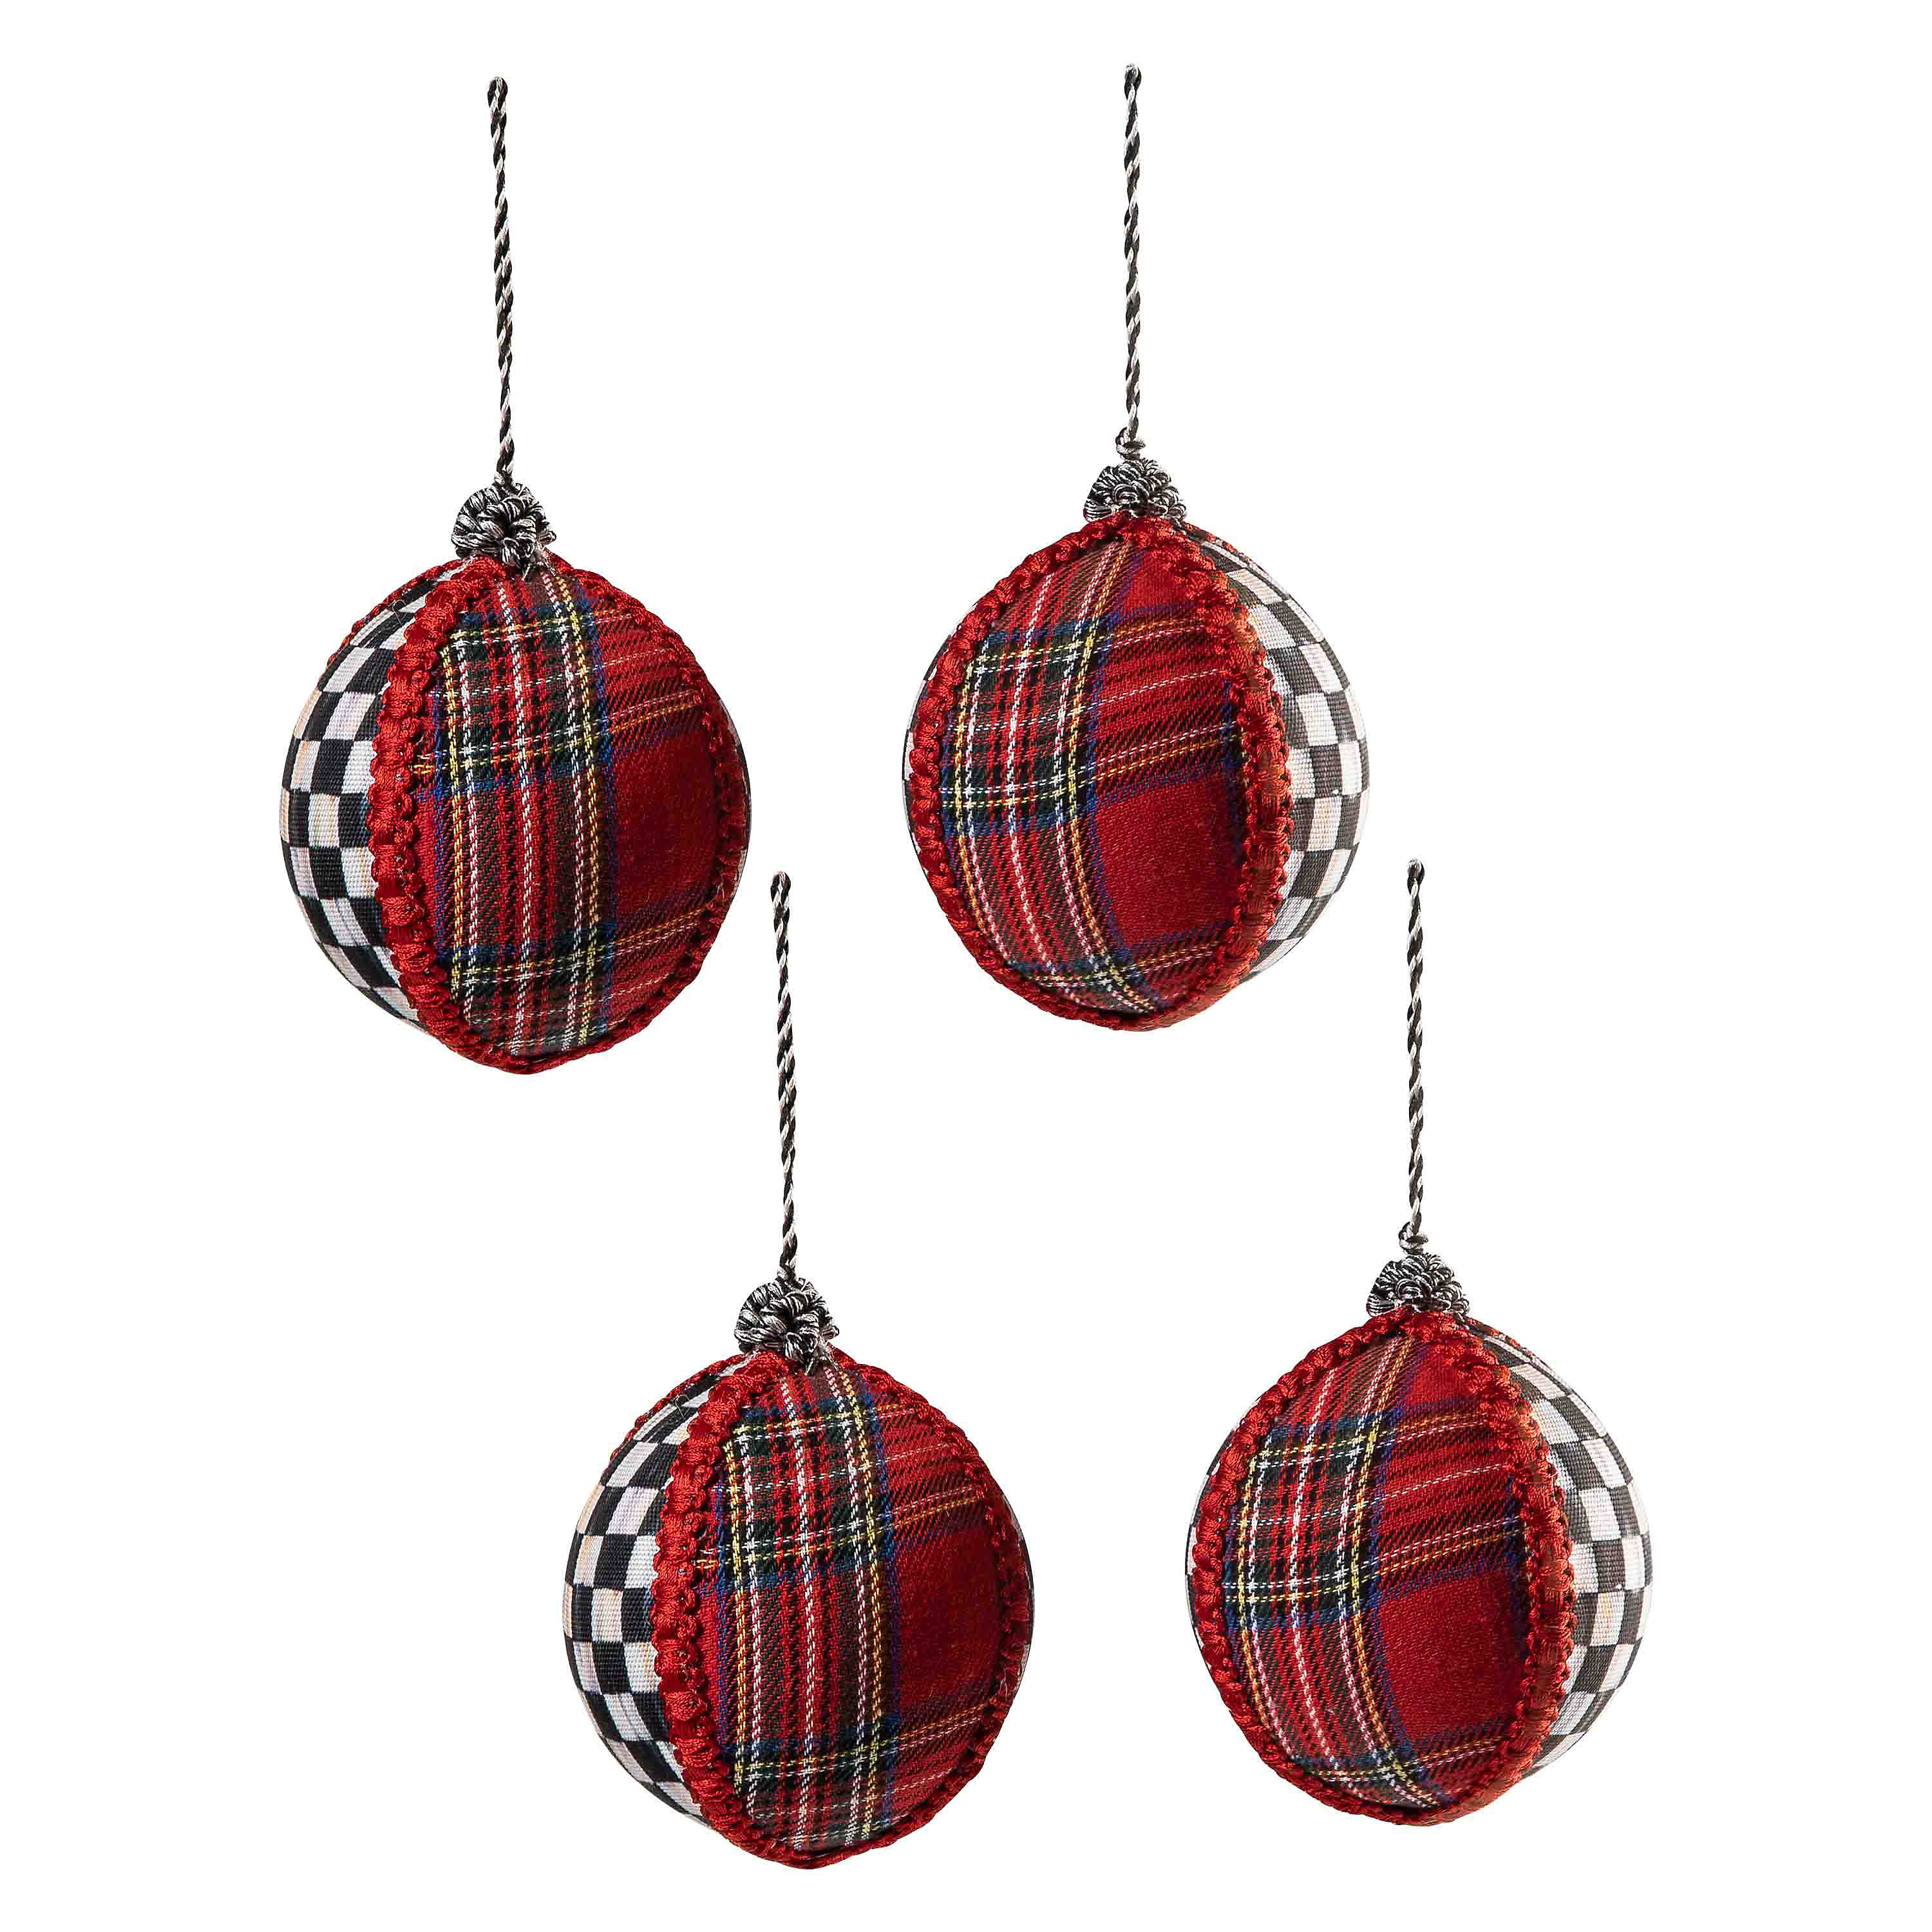 Tartastic Ball Ornaments, Set of 4 mackenzie-childs Panama 0